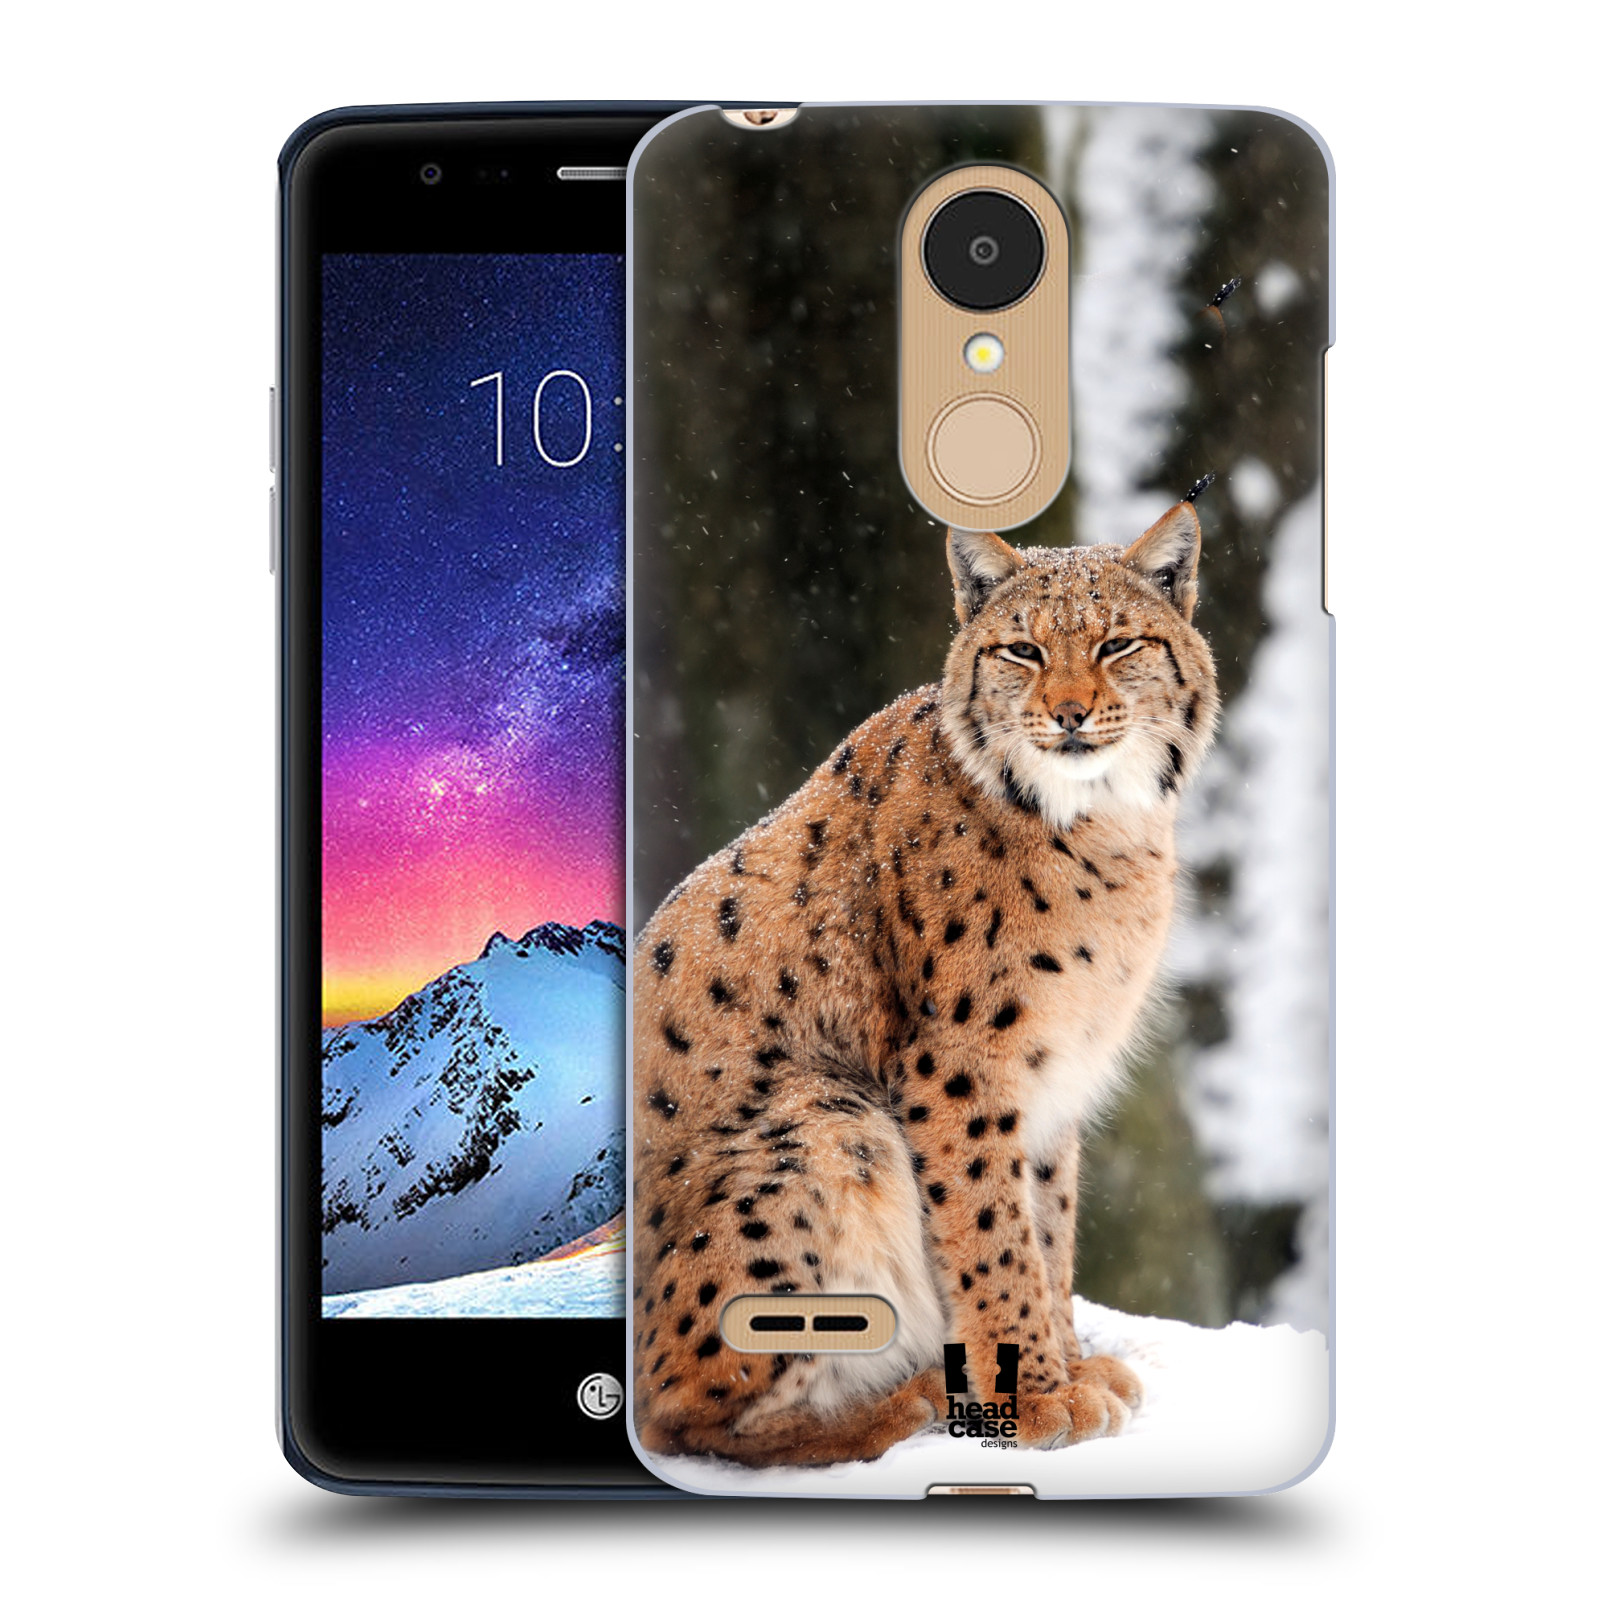 HEAD CASE plastový obal na mobil LG K9 / K8 2018 vzor slavná zvířata foto rys